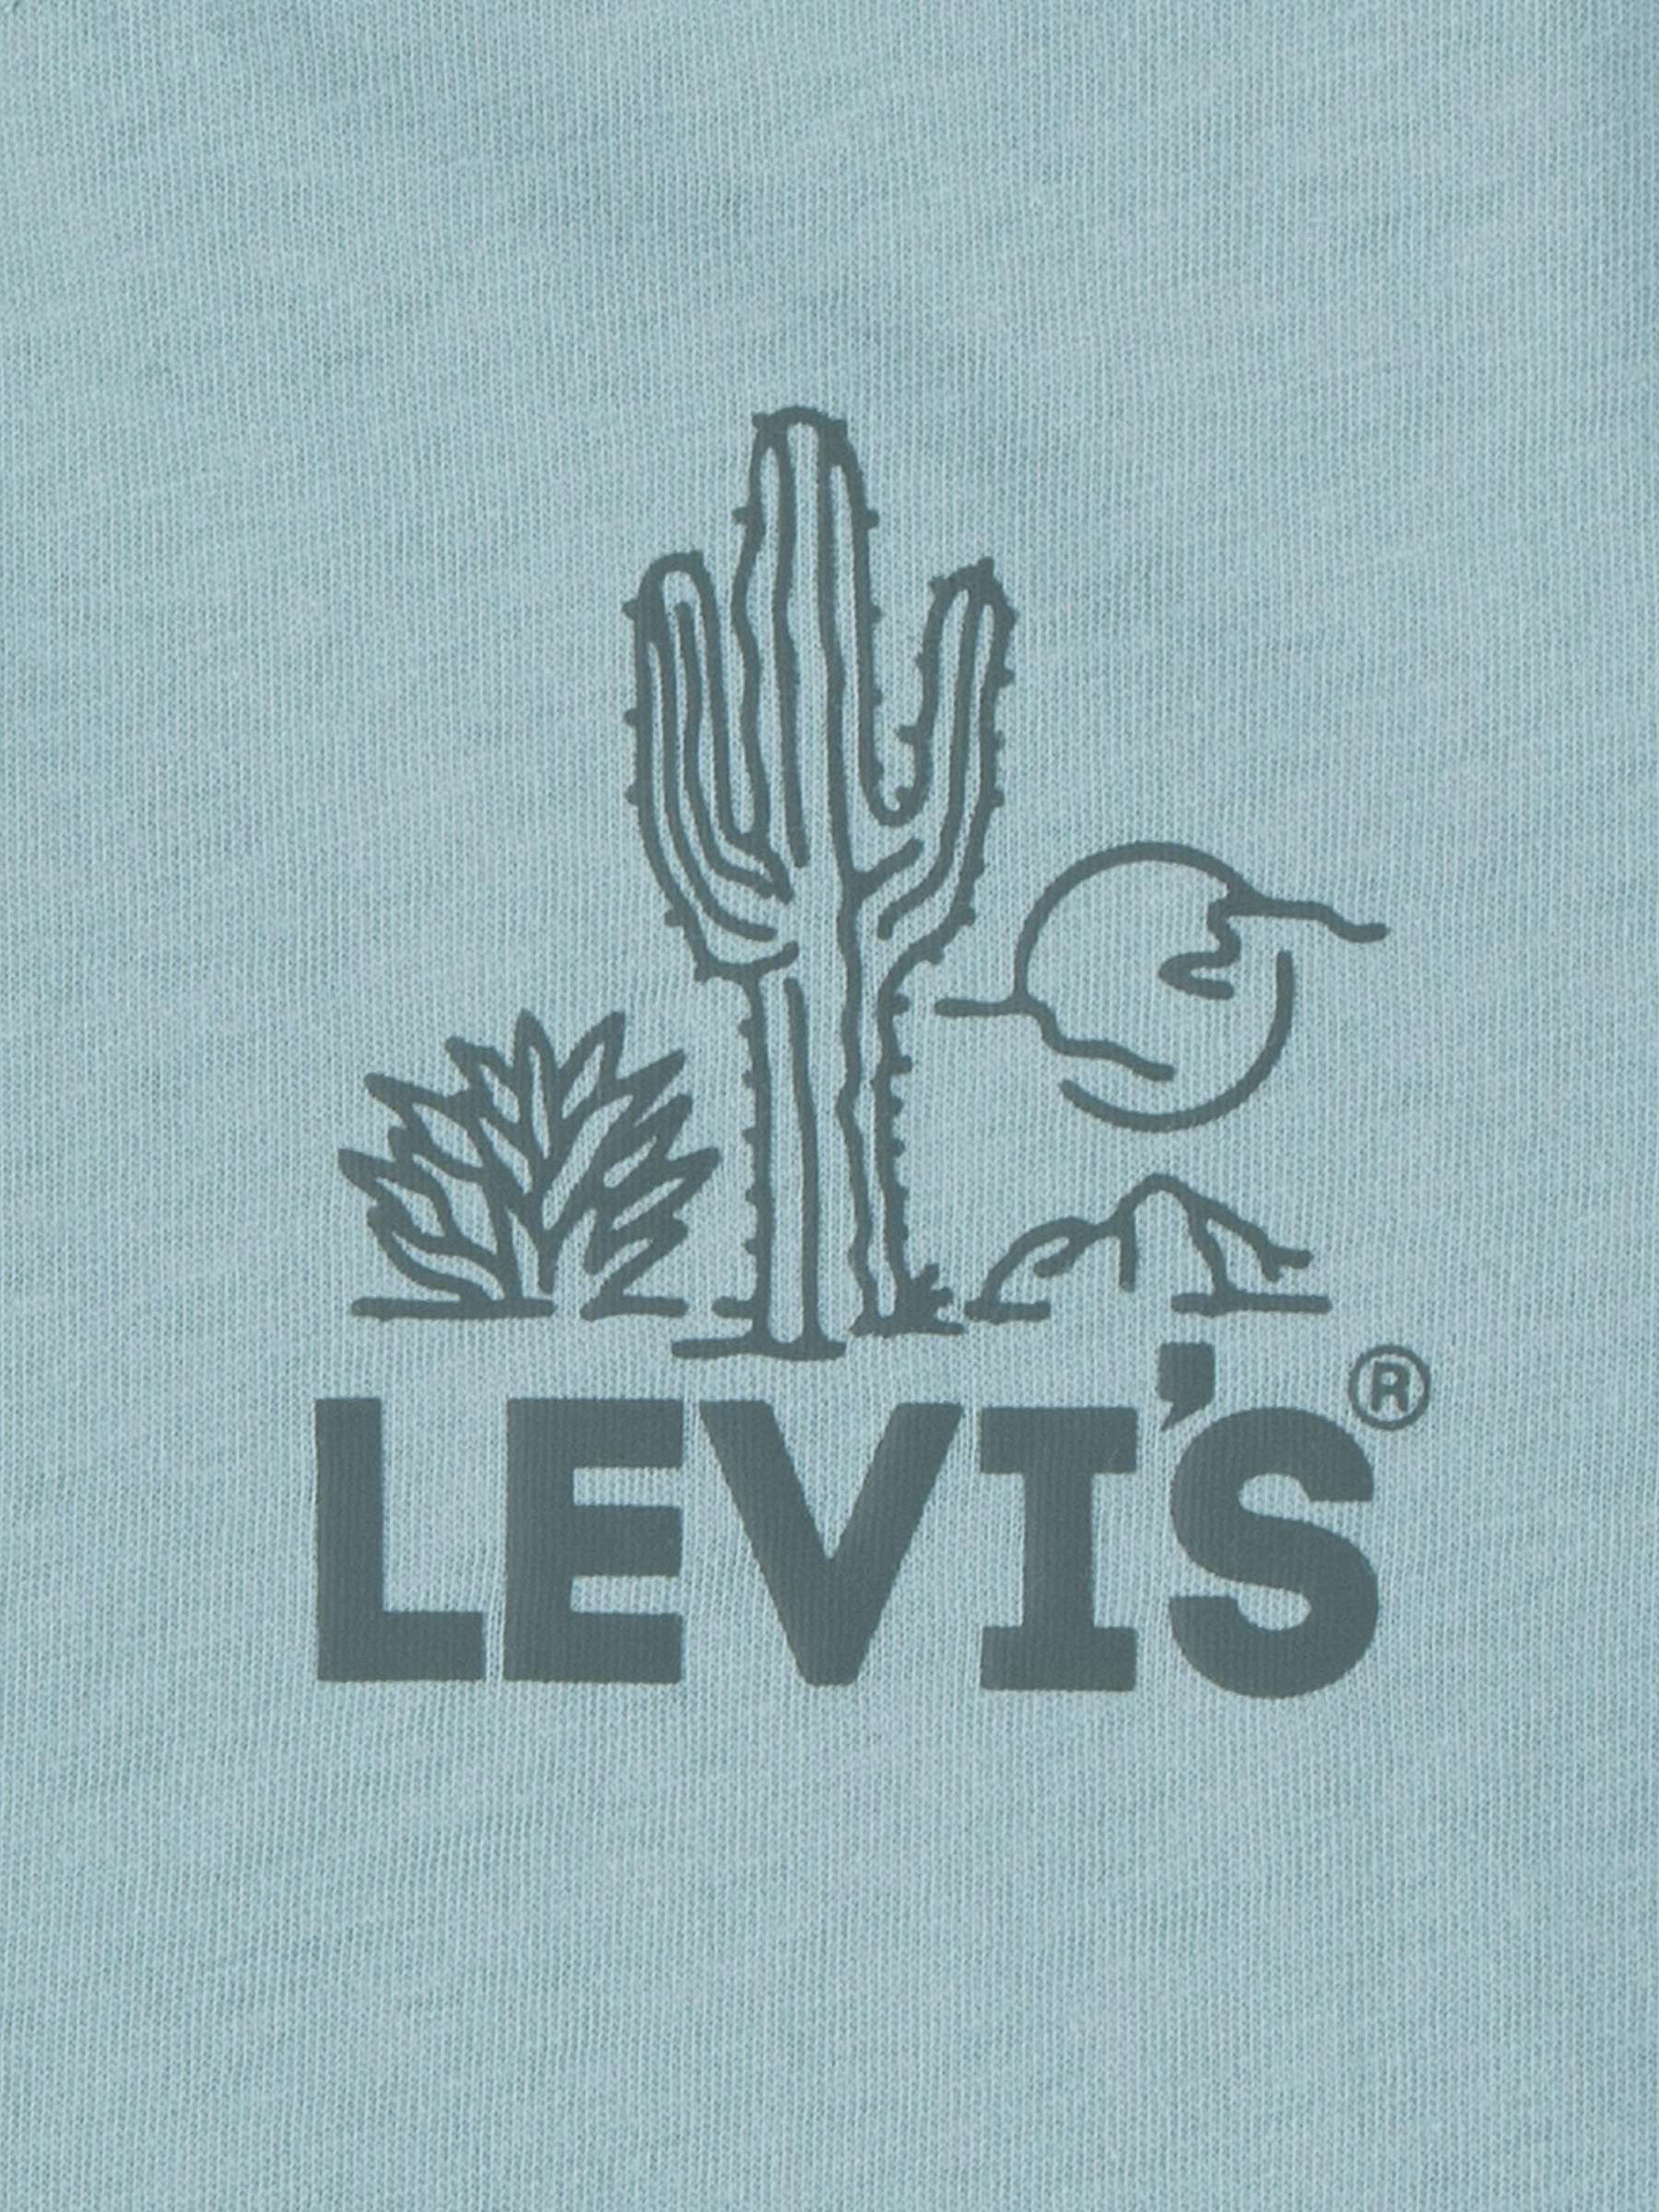 Buy Levi's Kids' Cacti Club Tee, Blue Surf Online at johnlewis.com